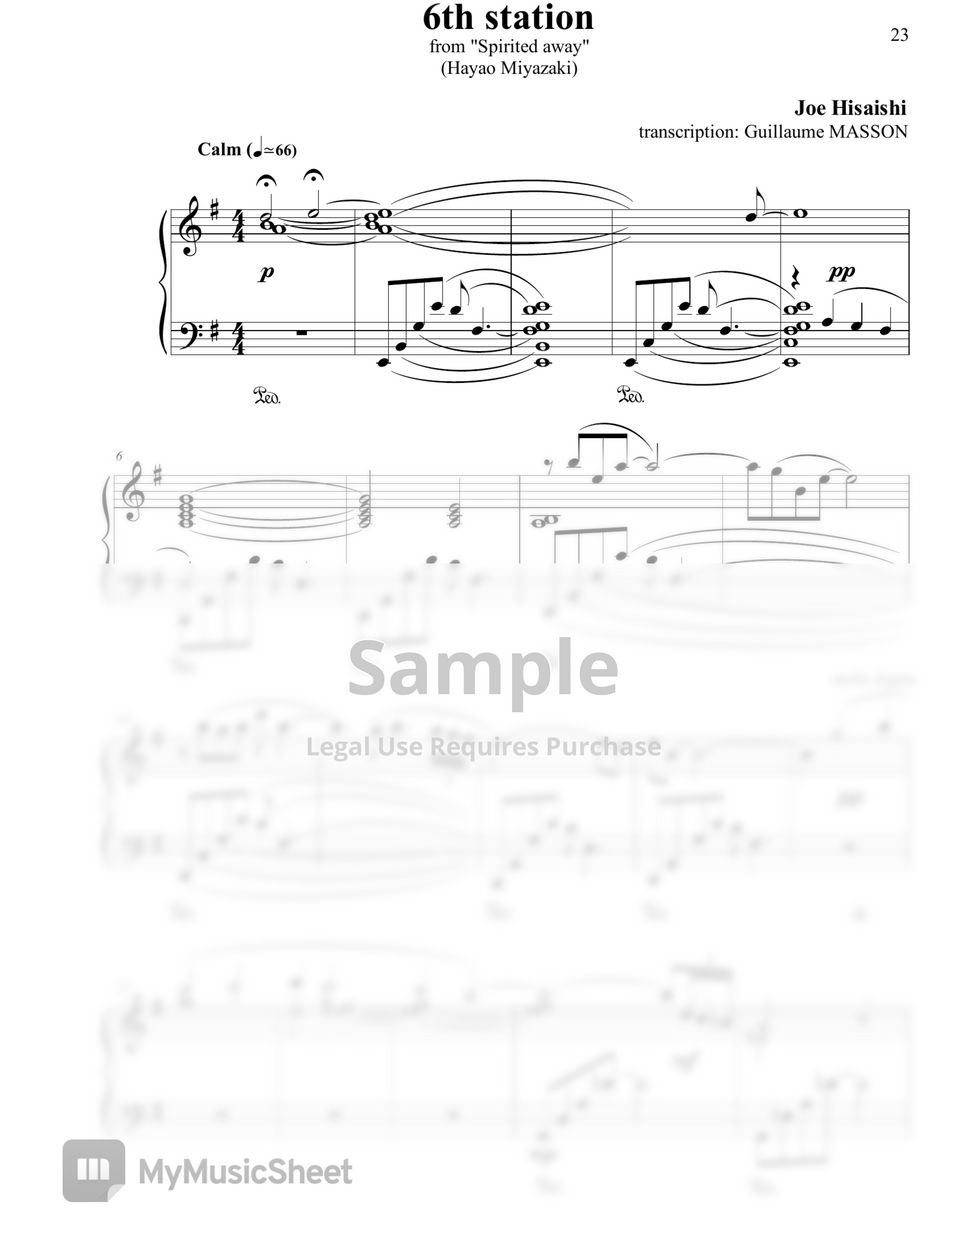 Joe Hisaishi - Chihiro Piano Collection by Guillaume Masson